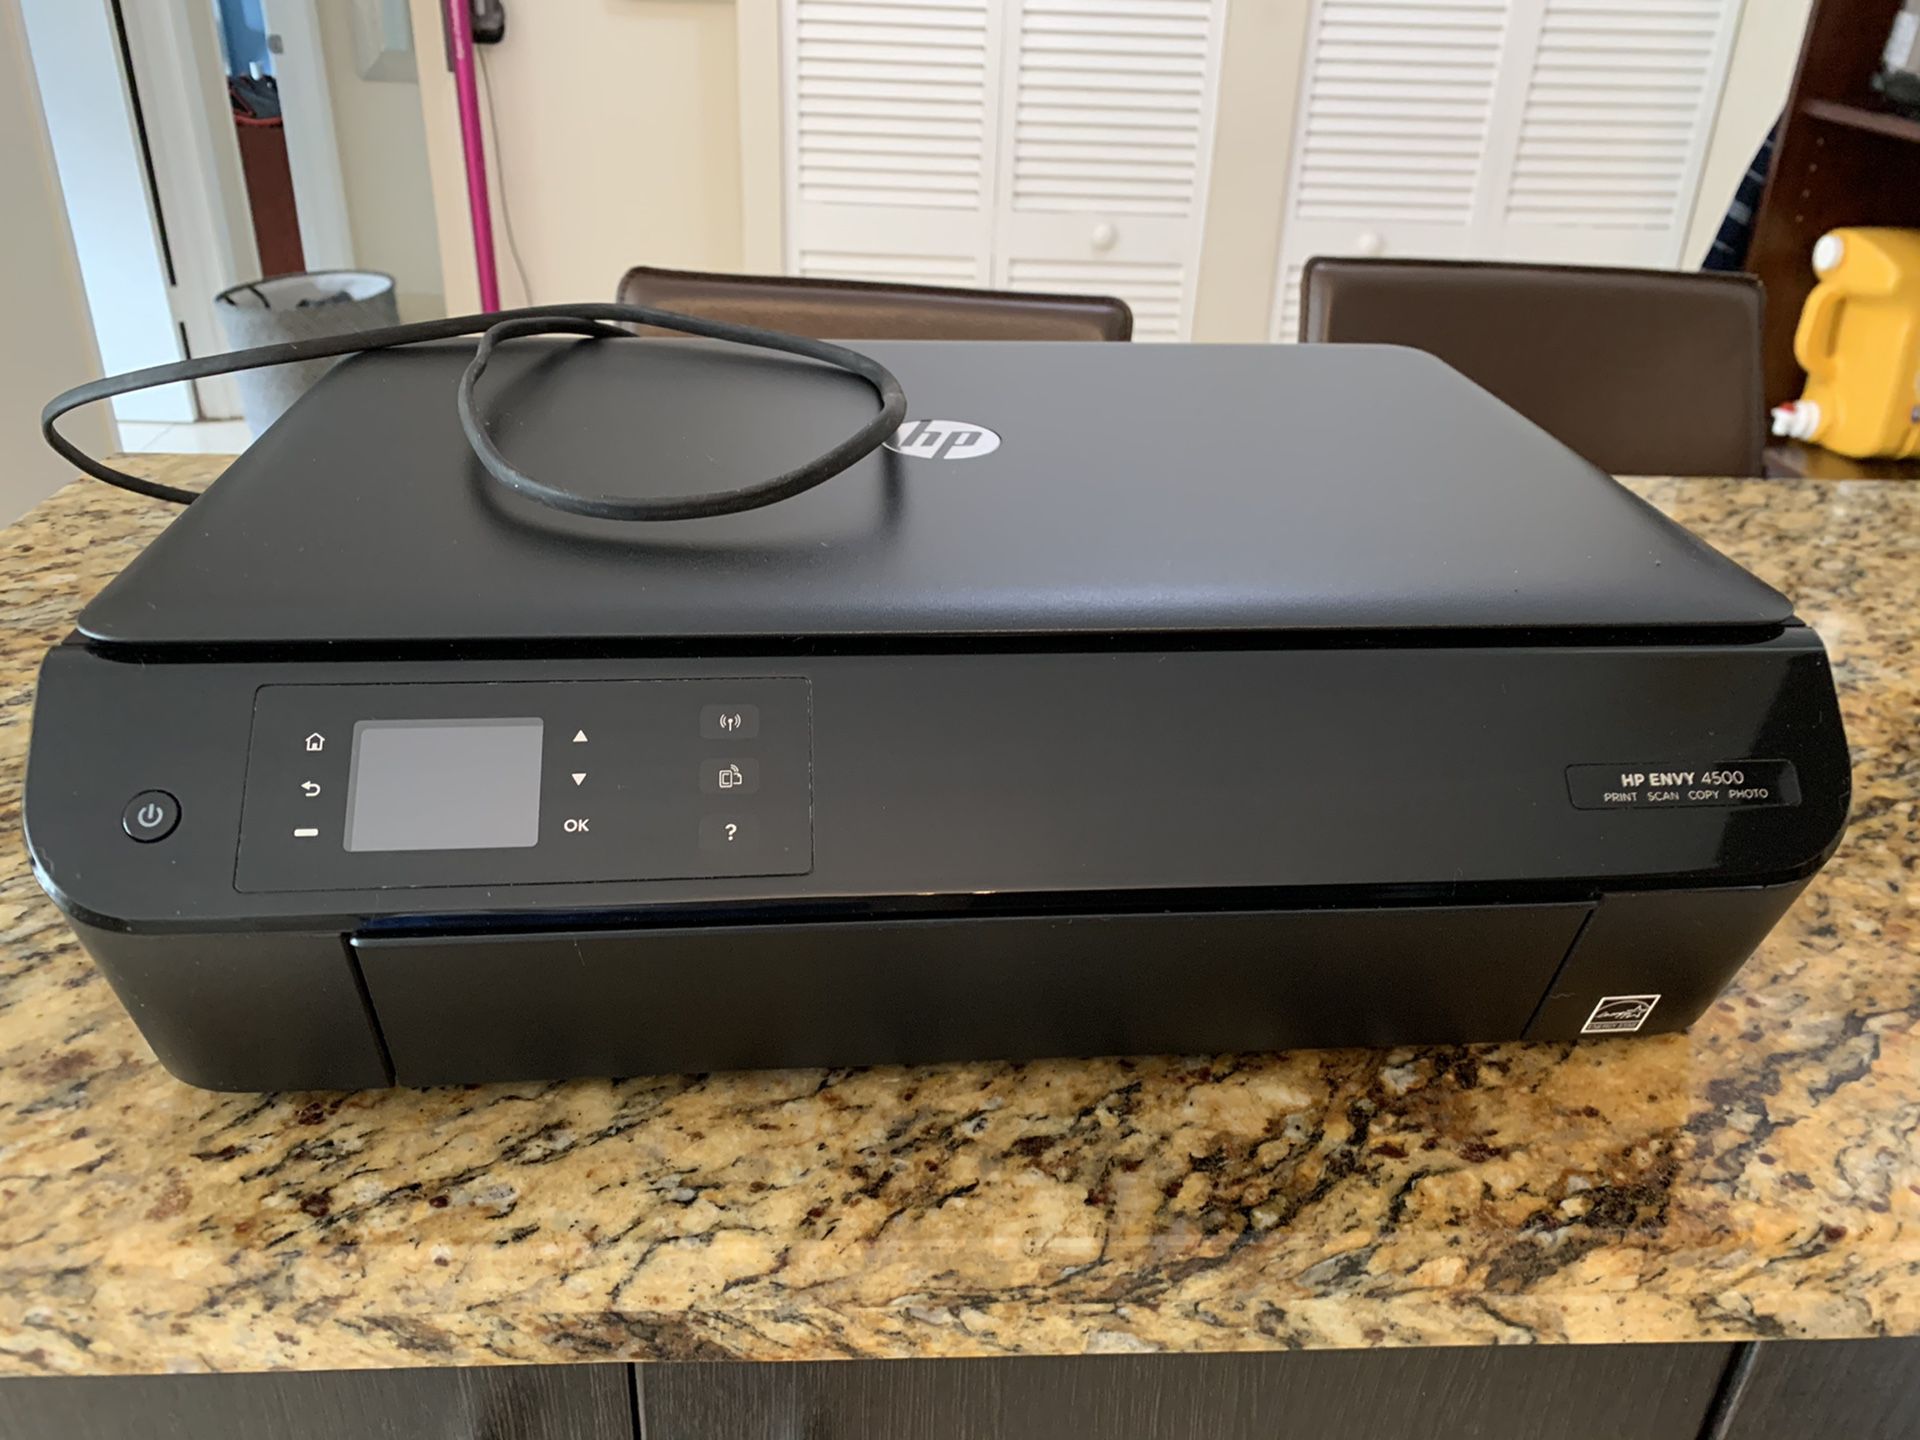 HP Envy 4500 Printer/ copy/ photo/ scanner